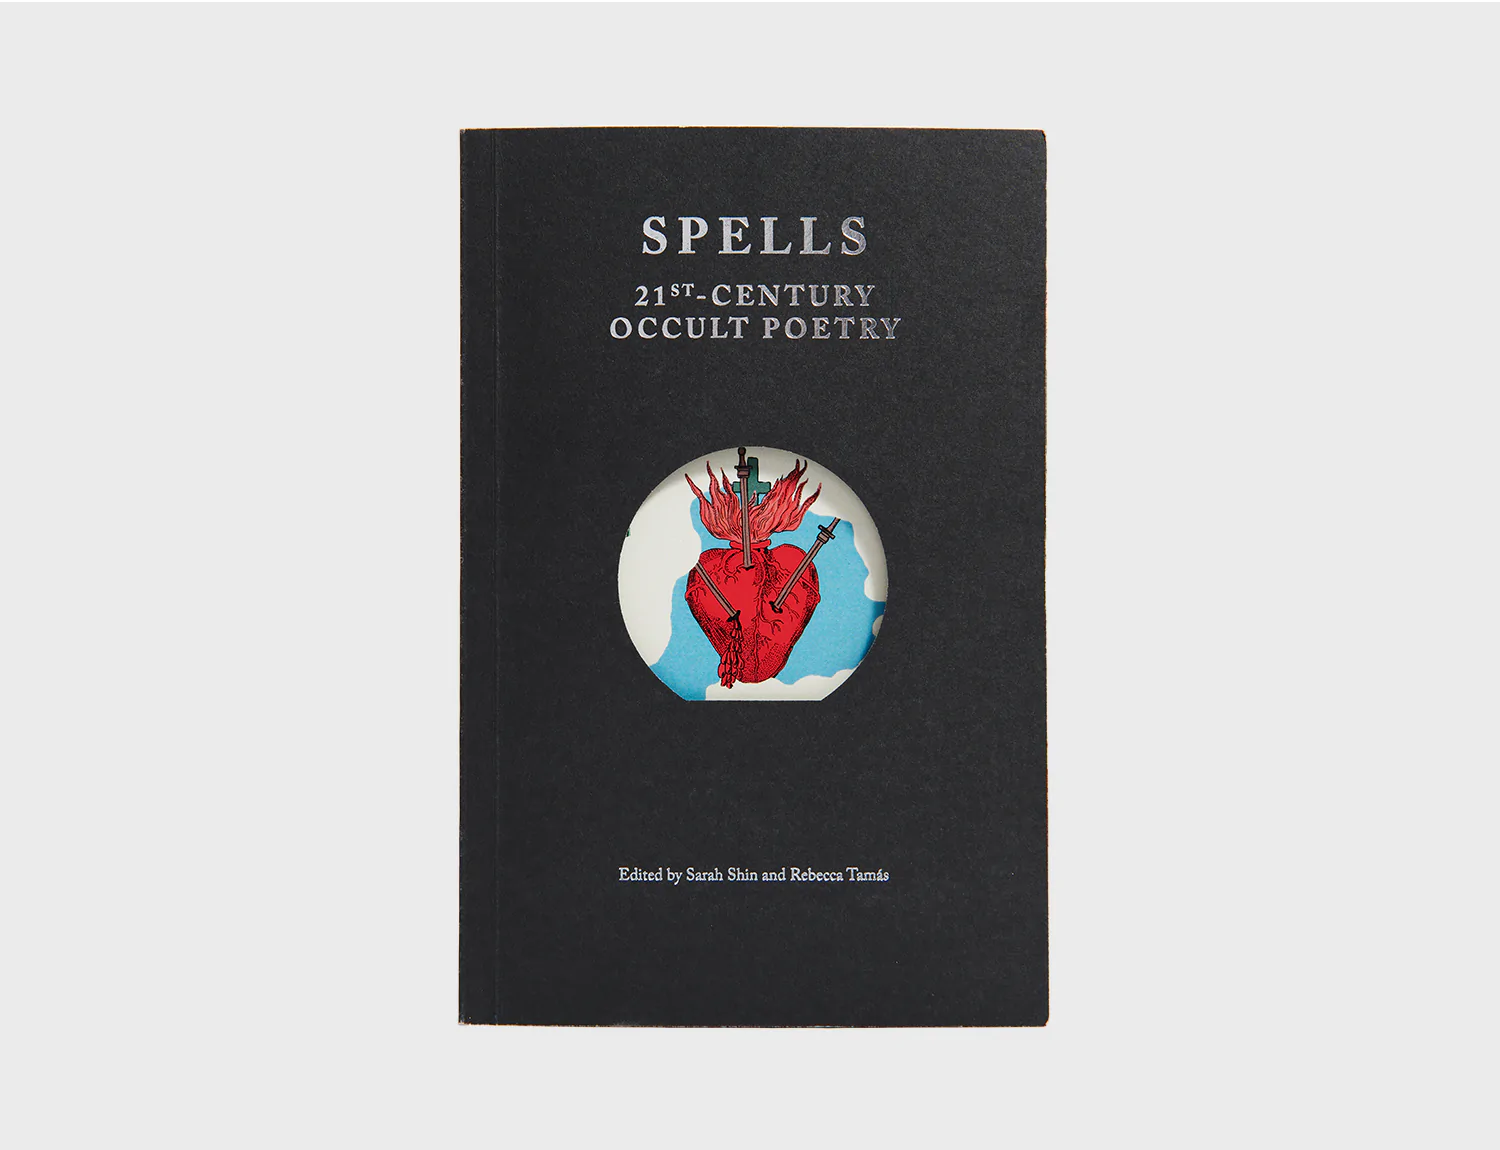 Spells: 21st Century Occult Poetry